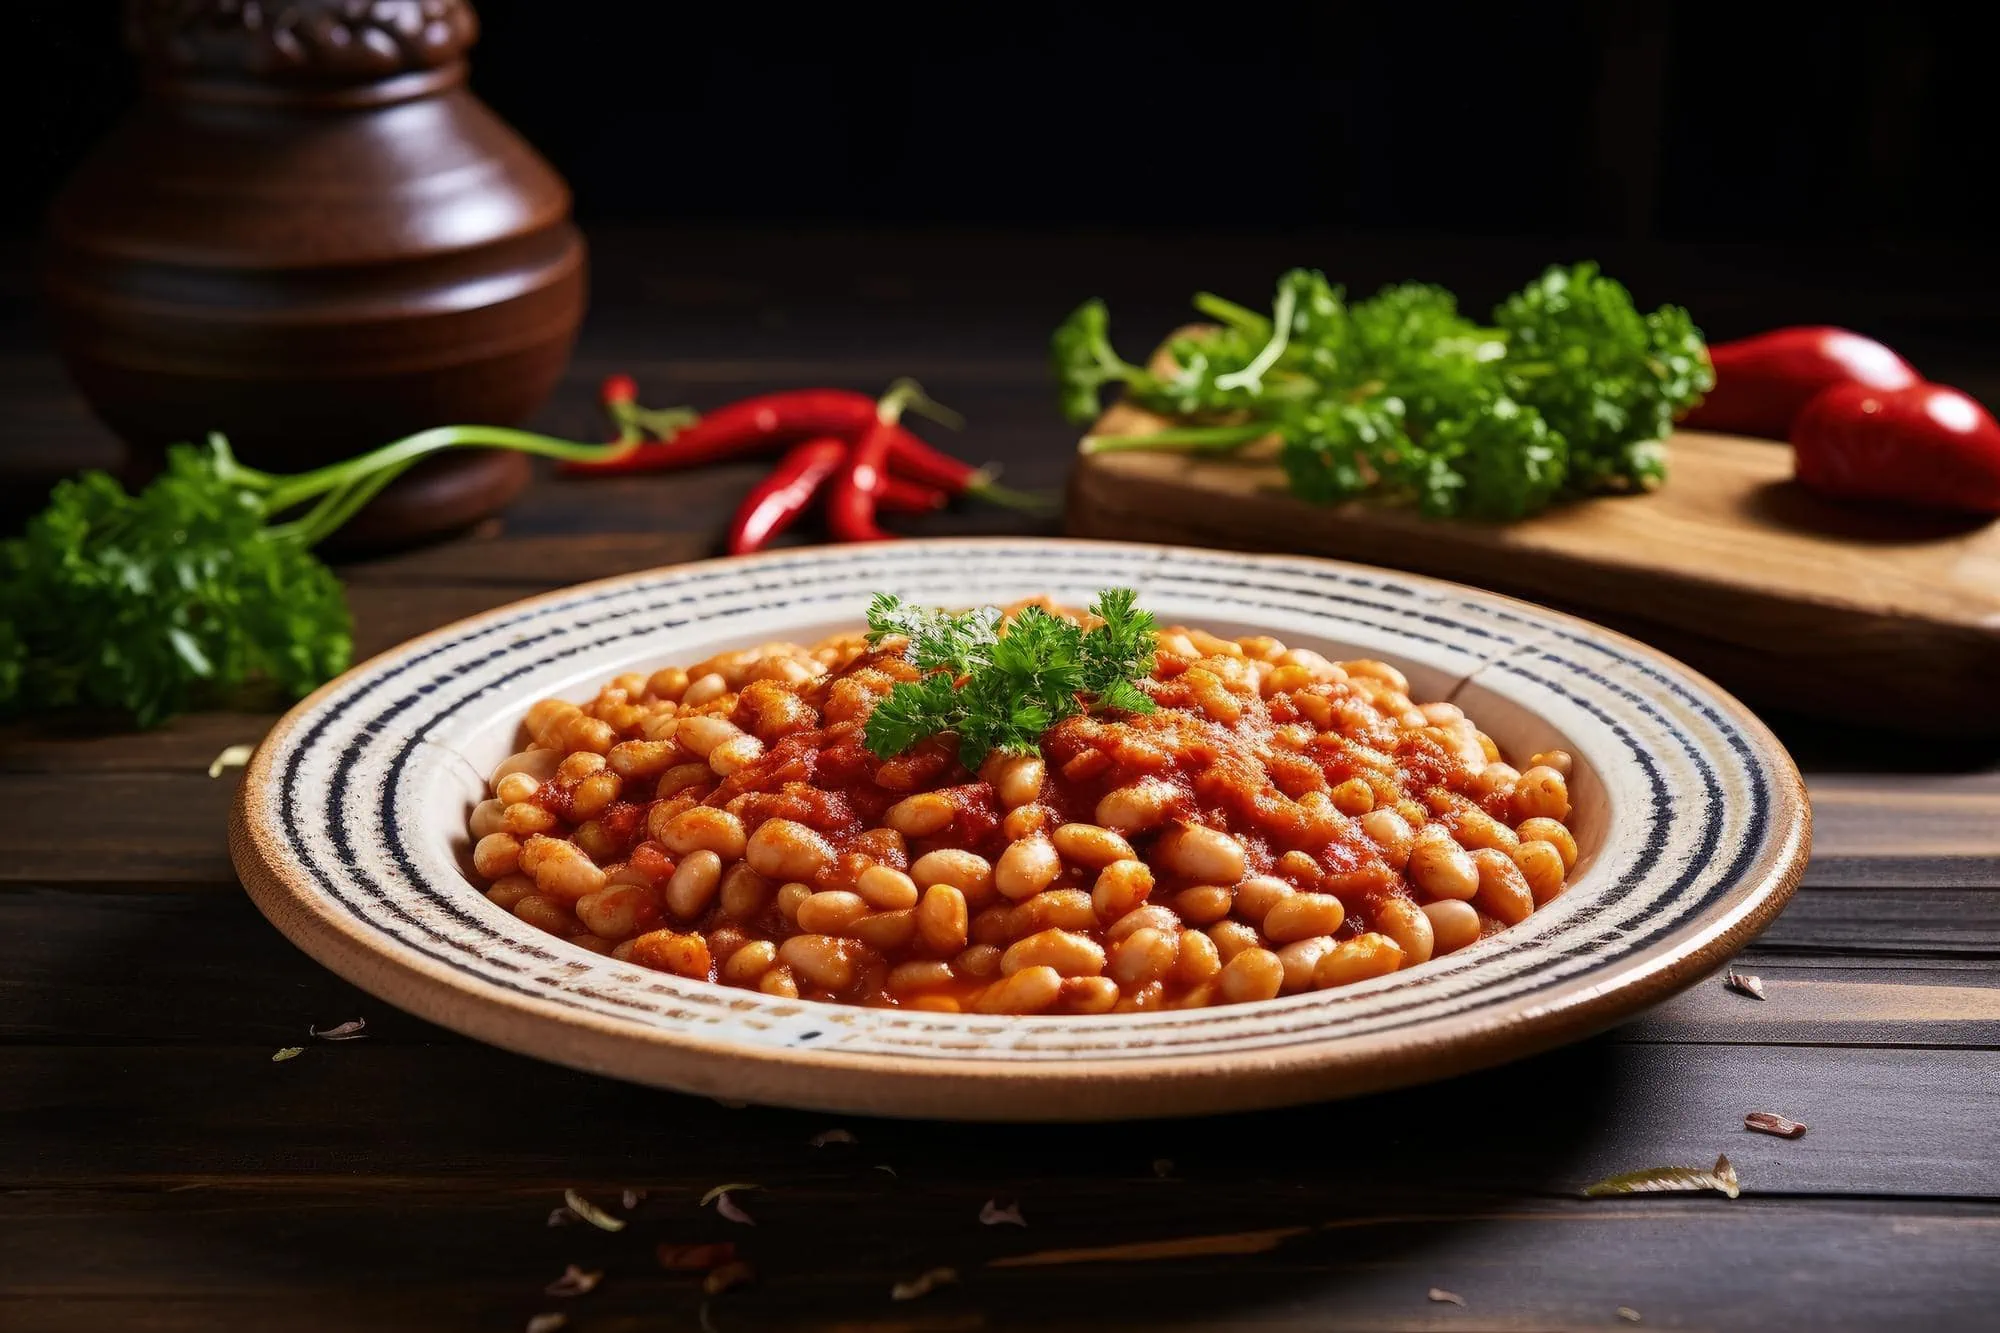 Peruvian beans served in a plate